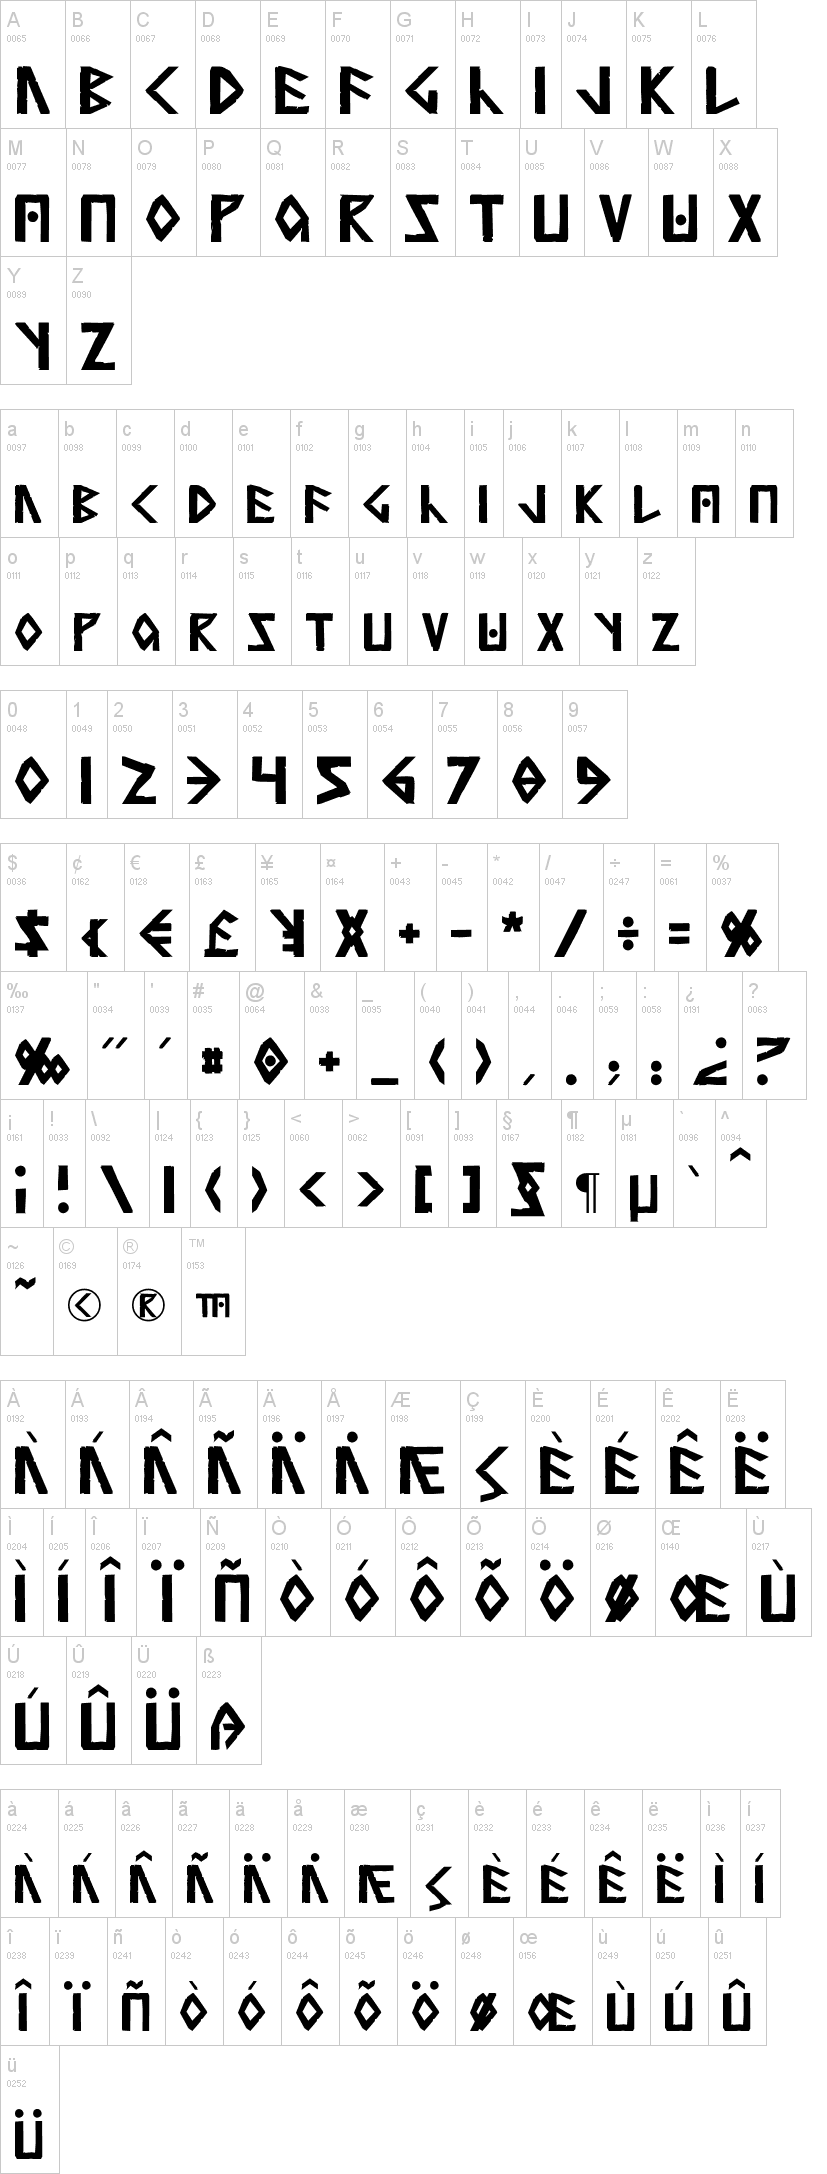 Anglorunic字符映射图